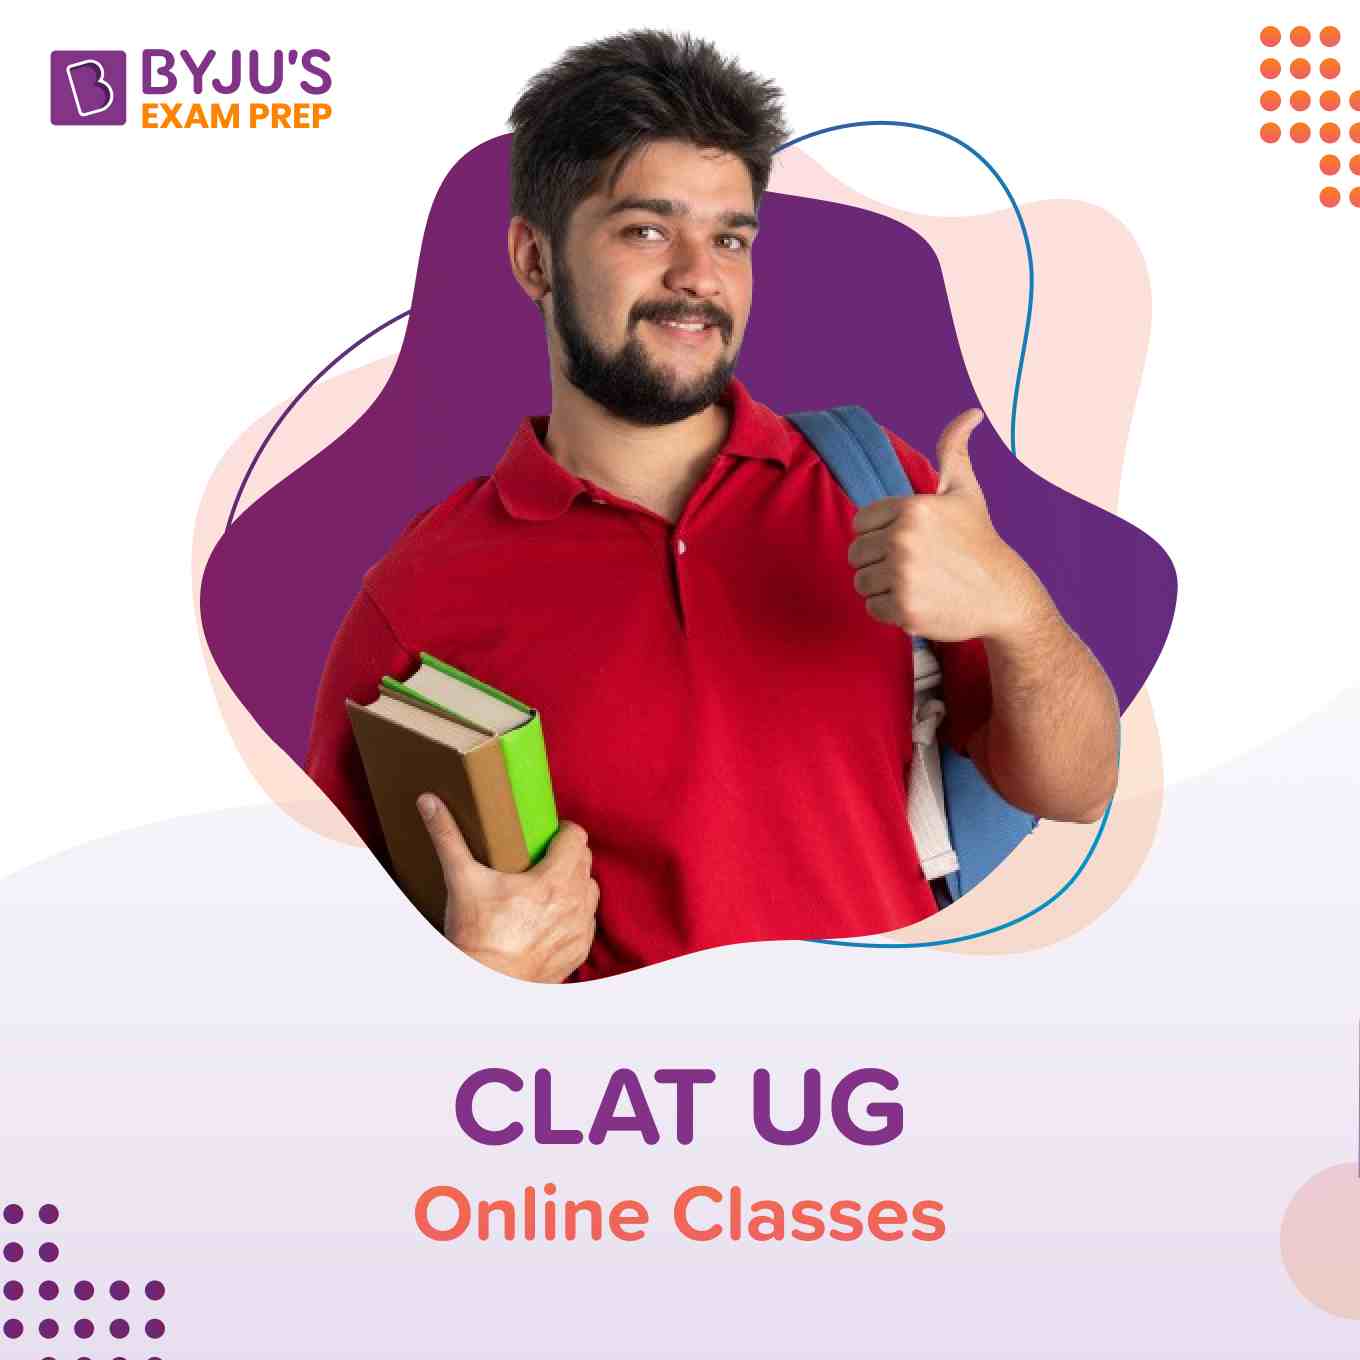 CLAT Online Classes